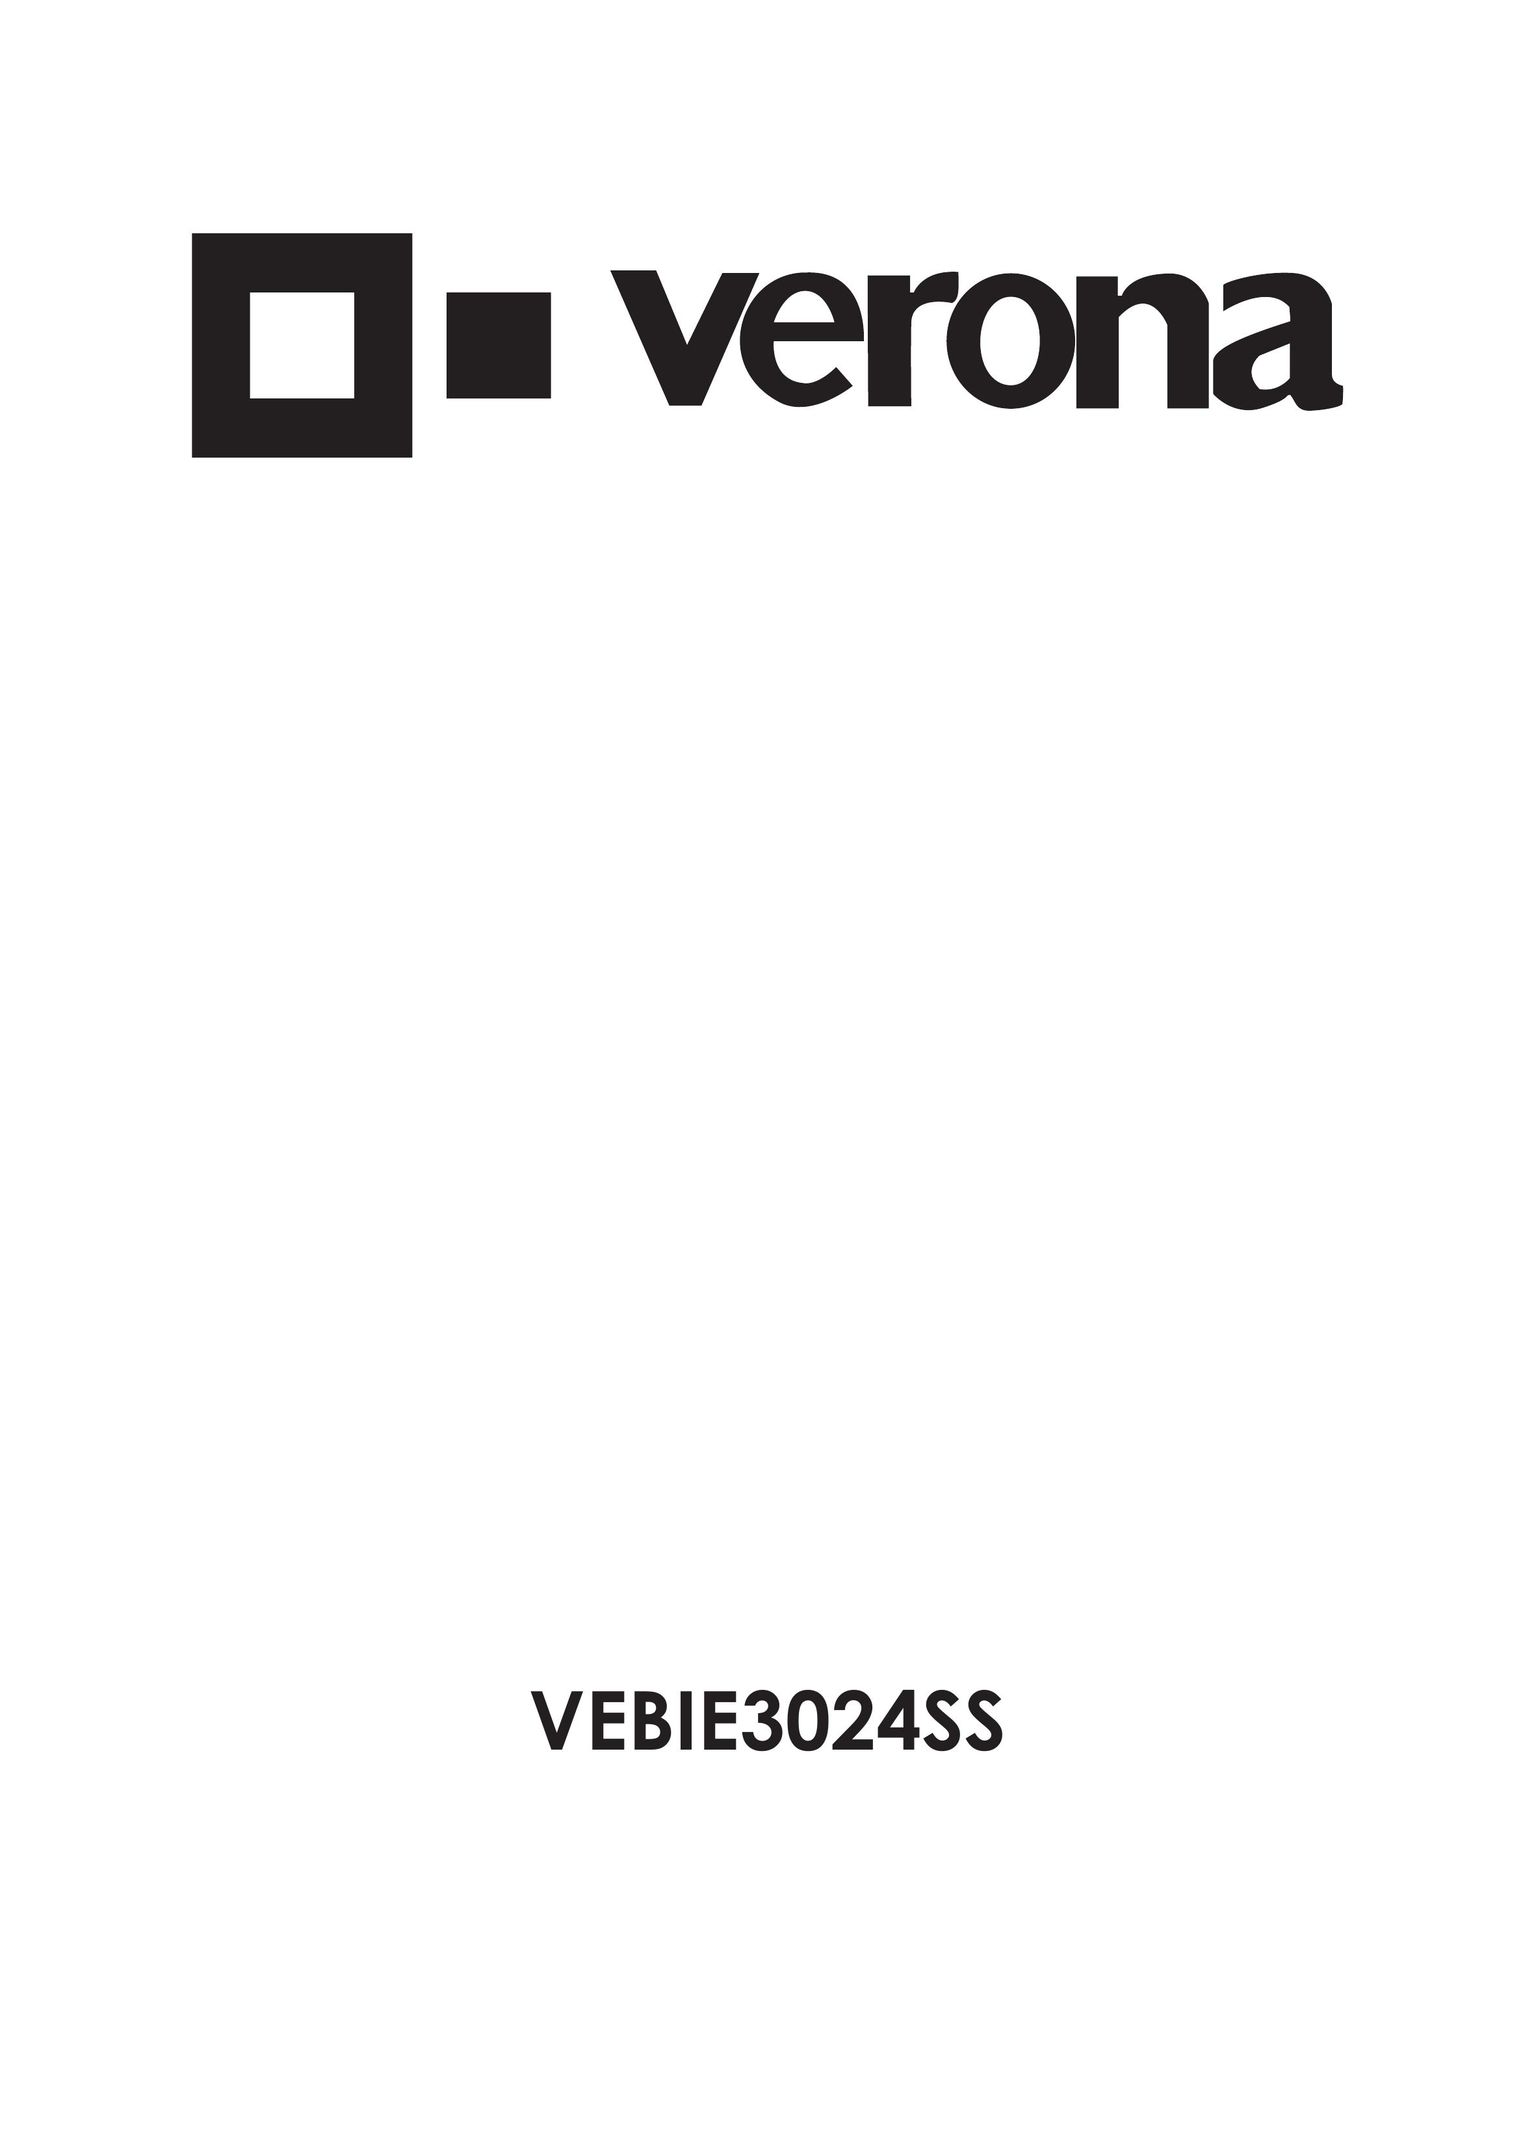 Verona VEBIE3024SS Double Oven User Manual